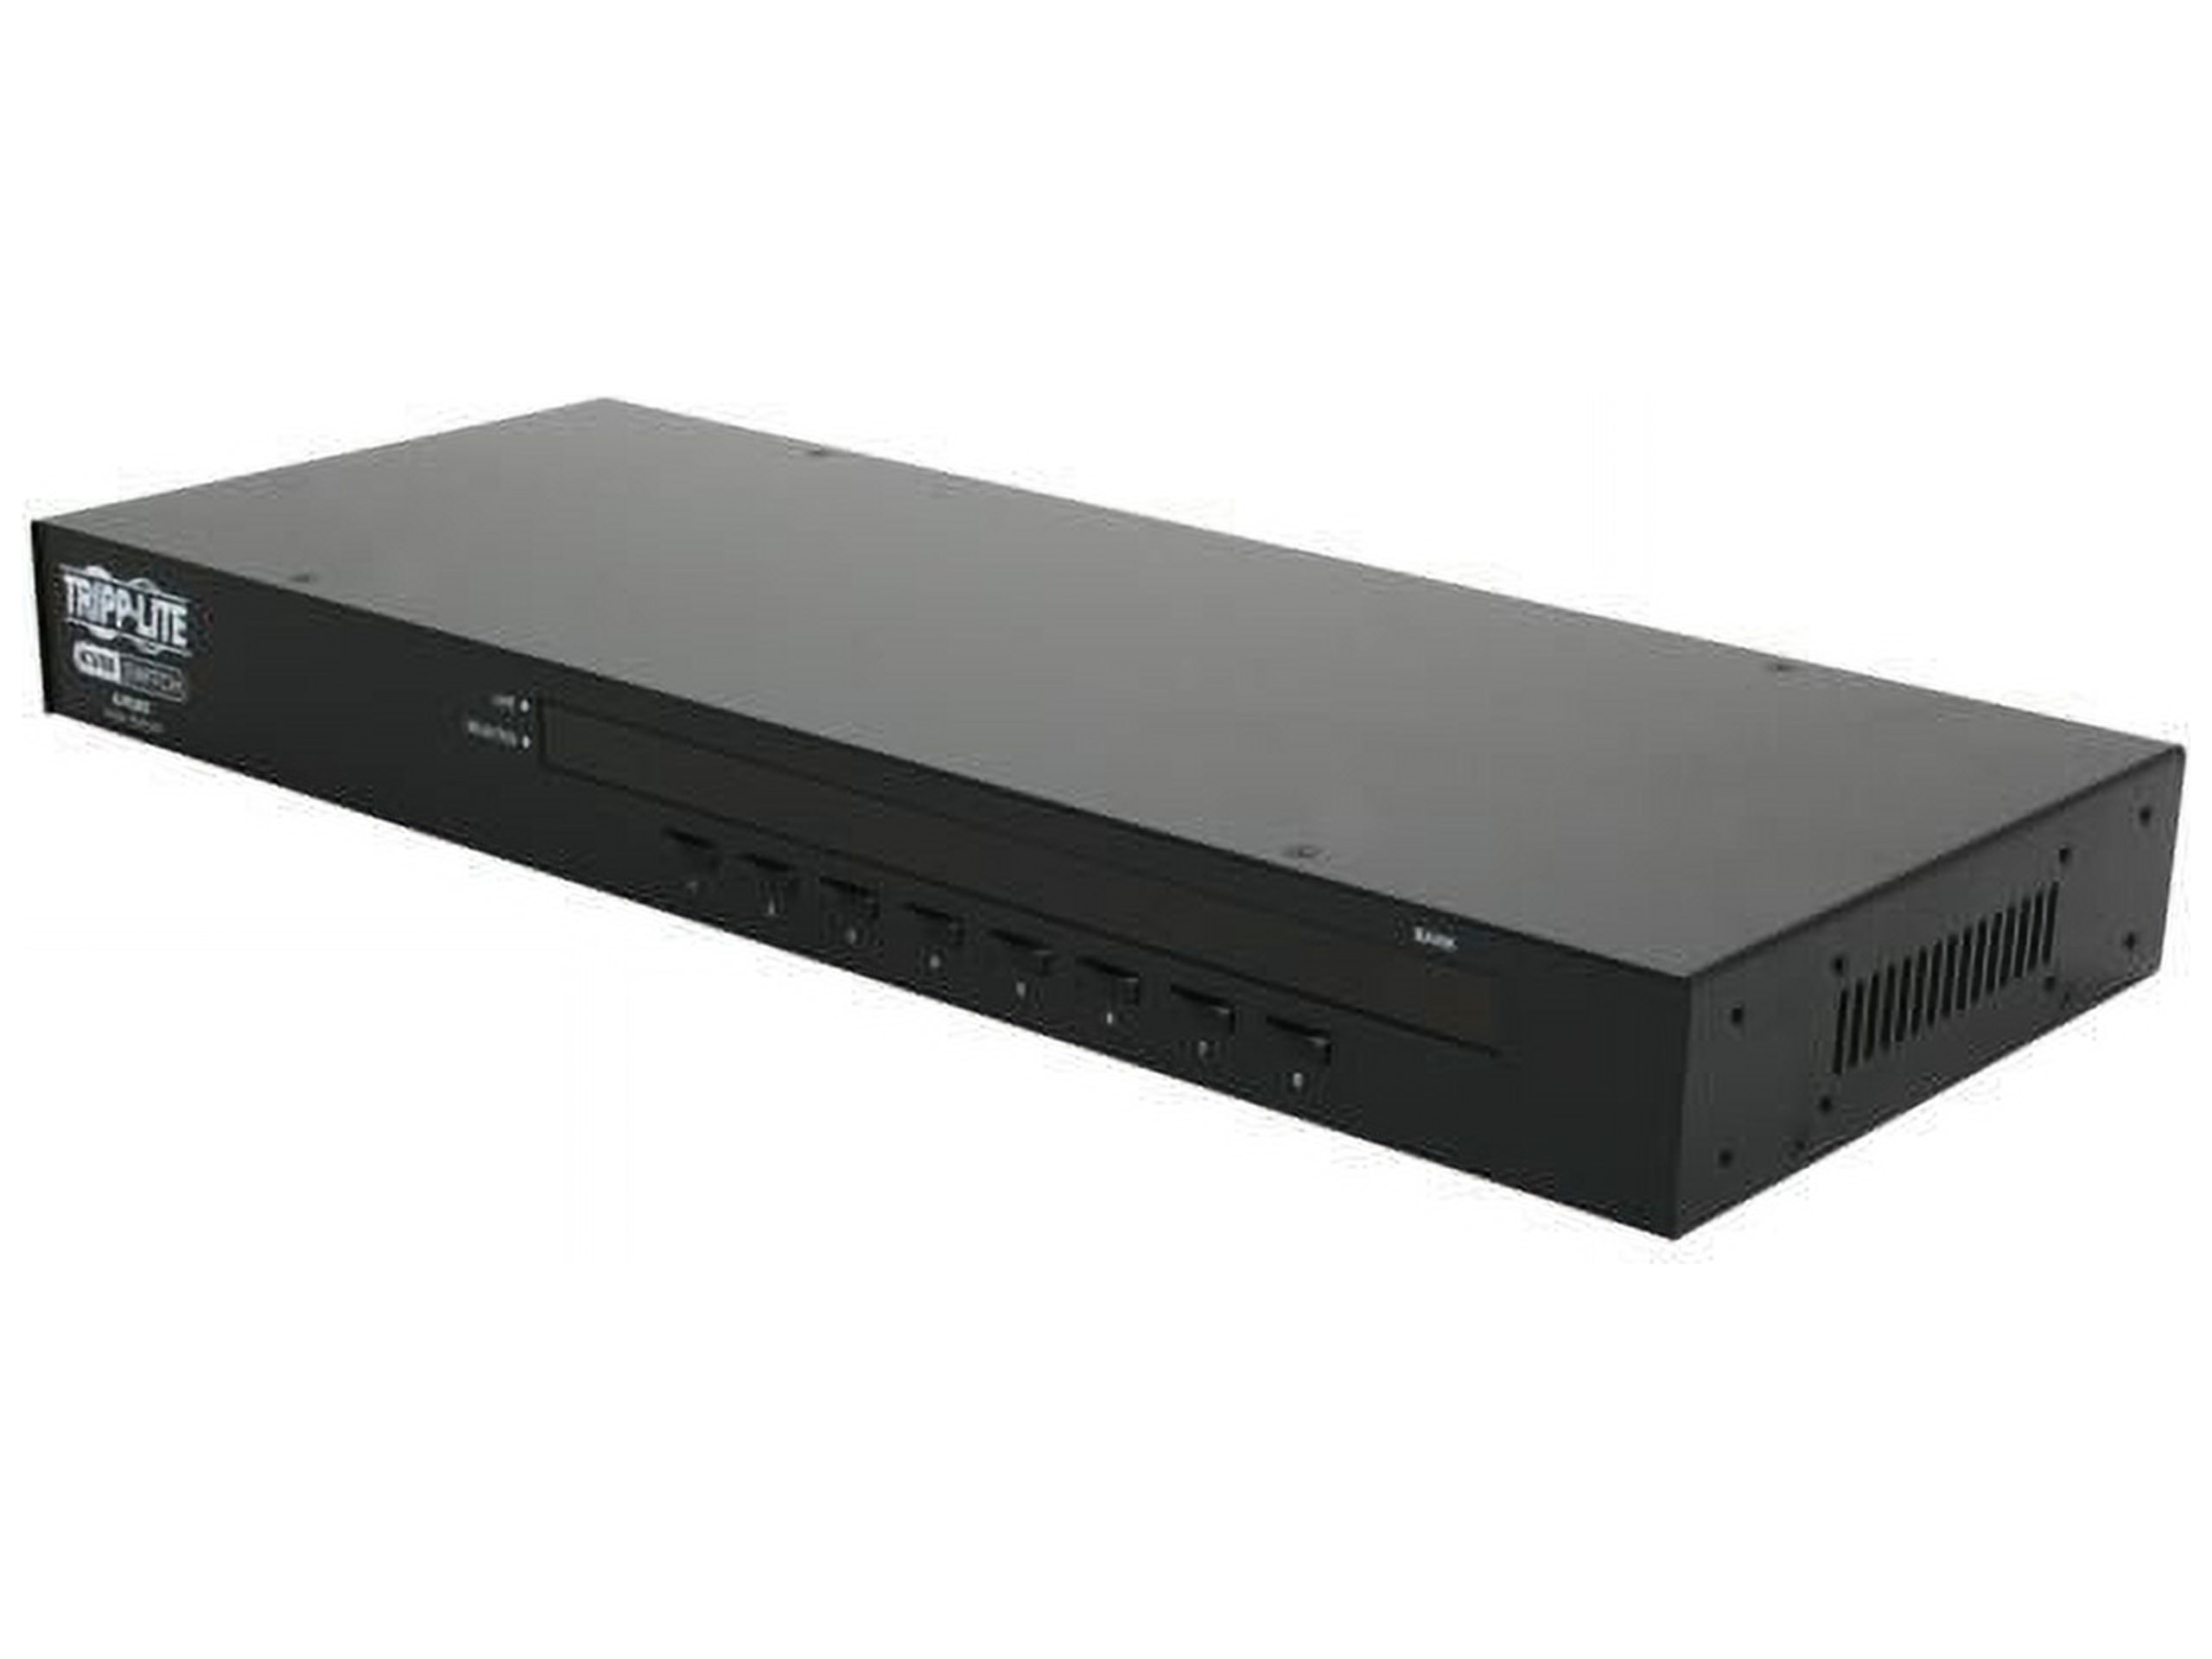 Tripp Lite 8-Port 1U Rack-Mount USB/PS2 KVM Switch with On-Screen Display (B042-008) - image 1 of 4